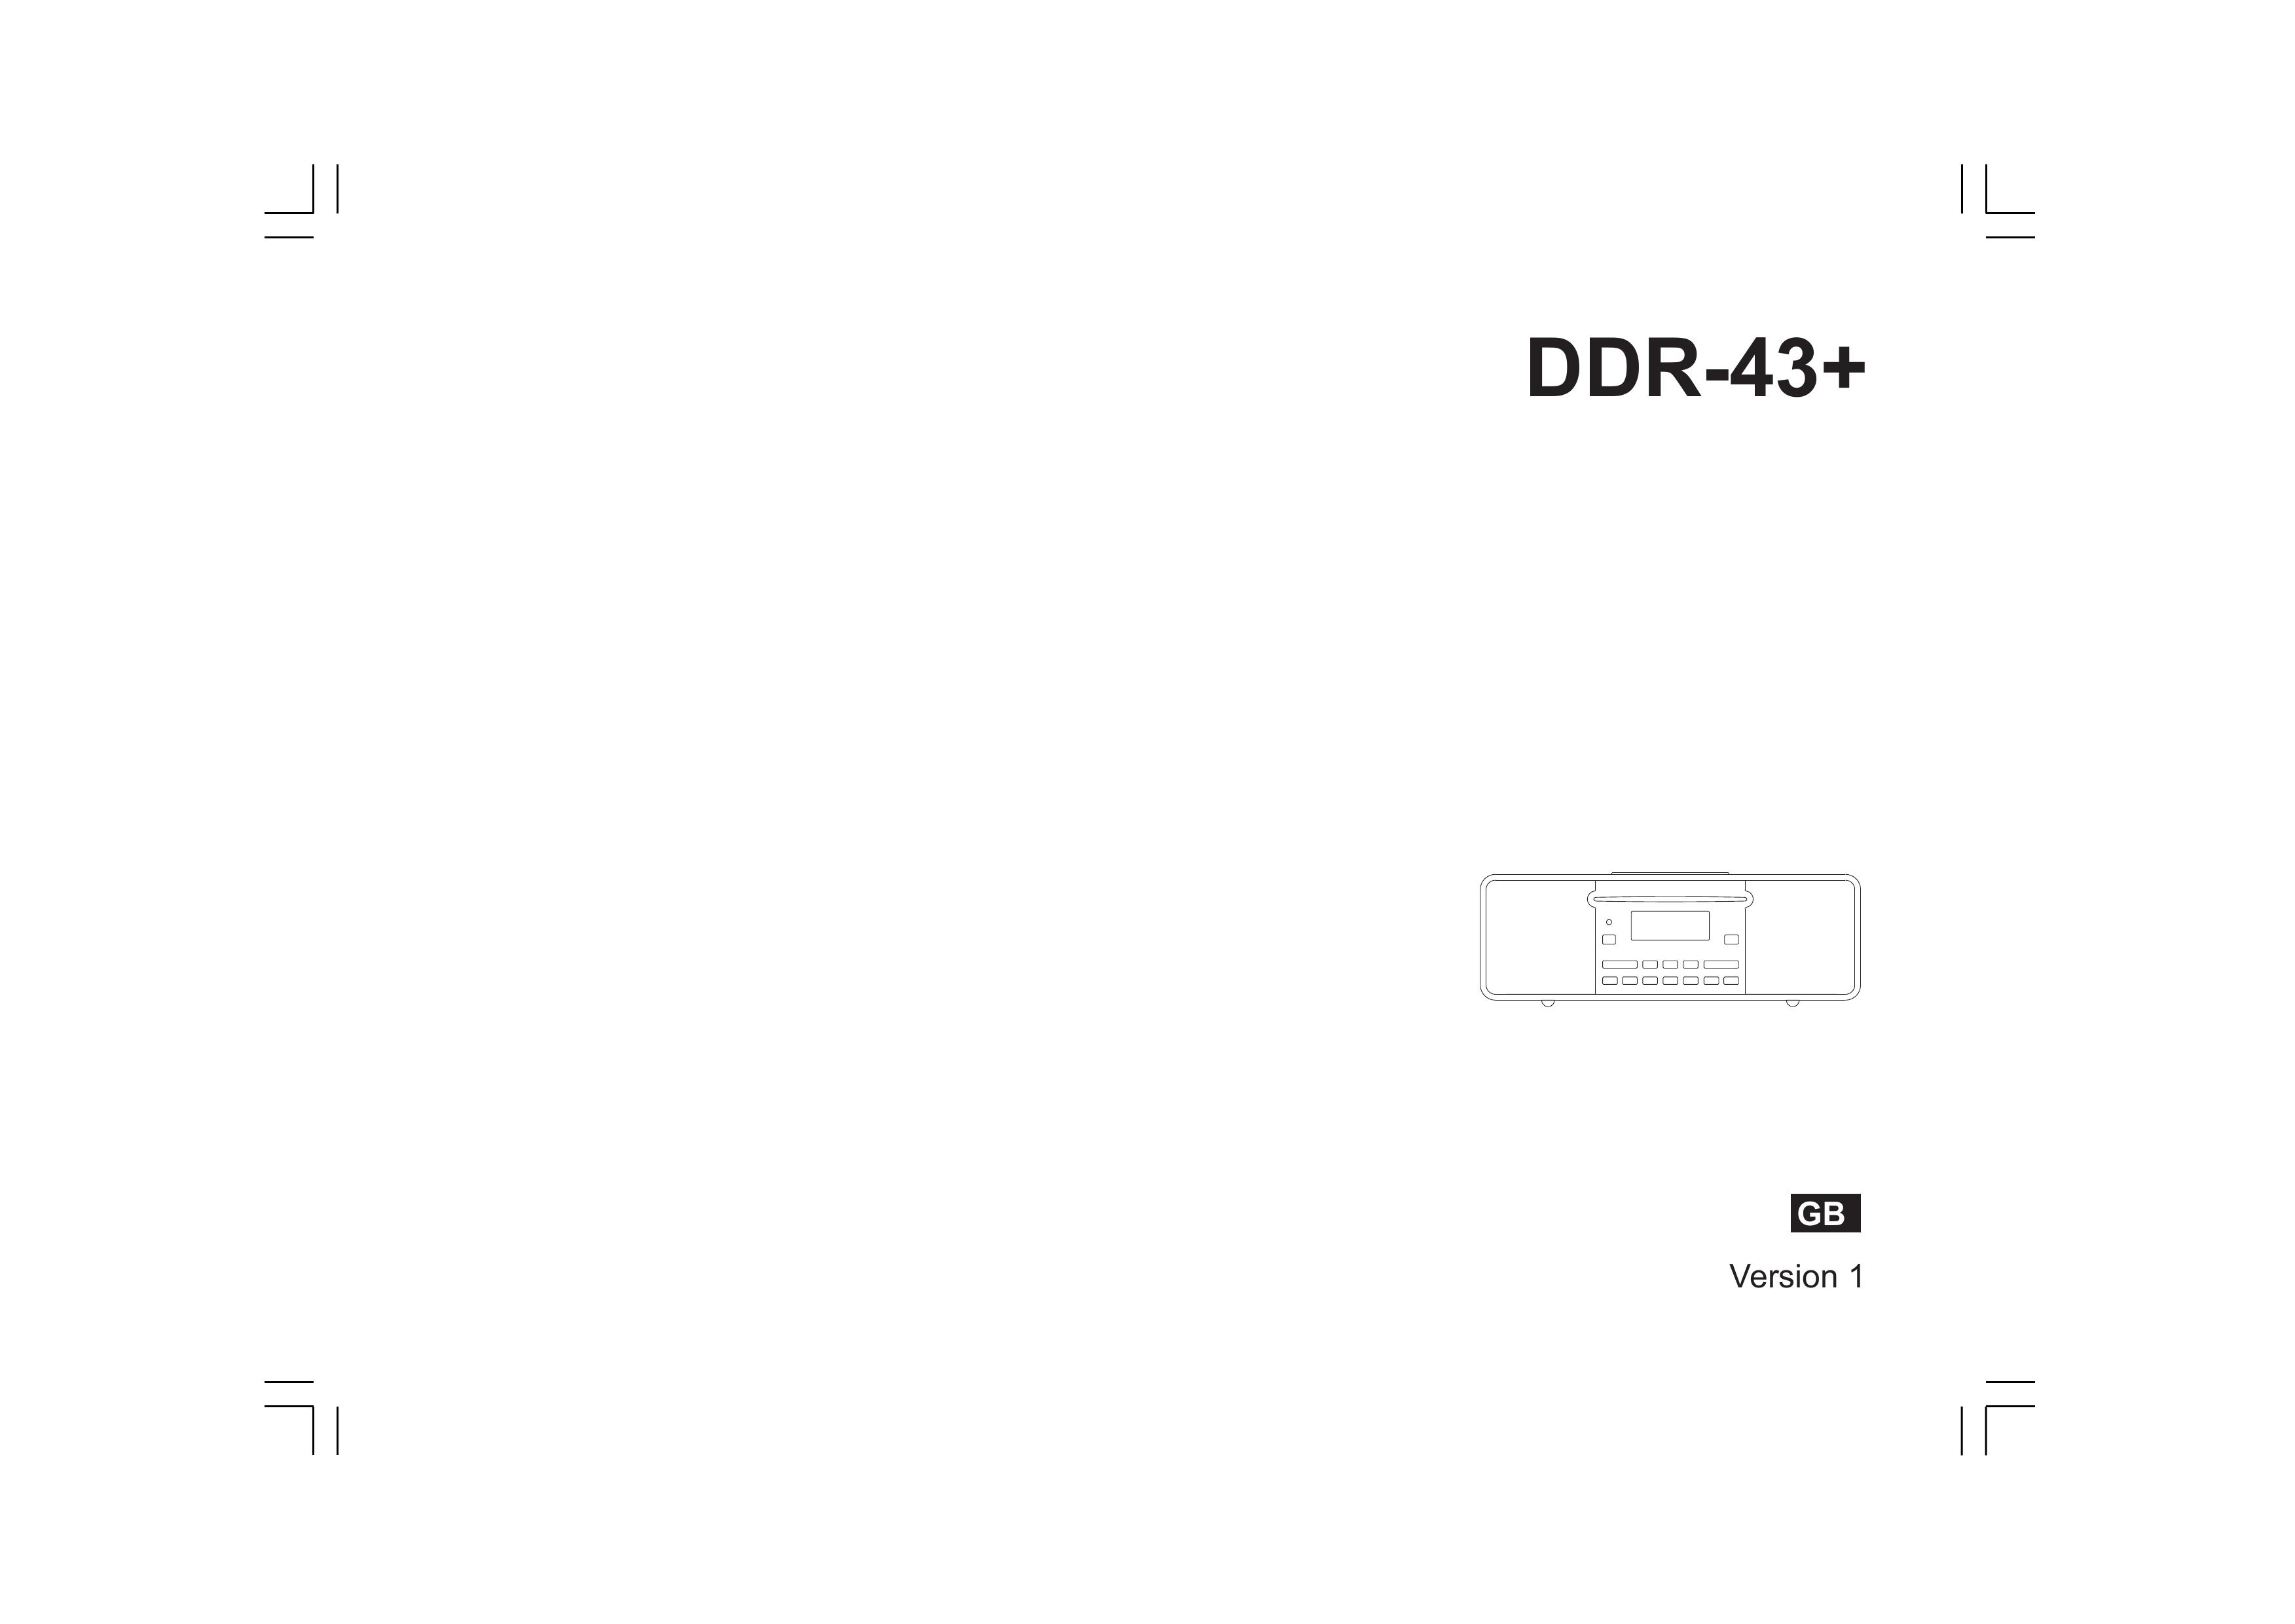 Apple DDR-43+ MP3 Docking Station User Manual (Page 1)